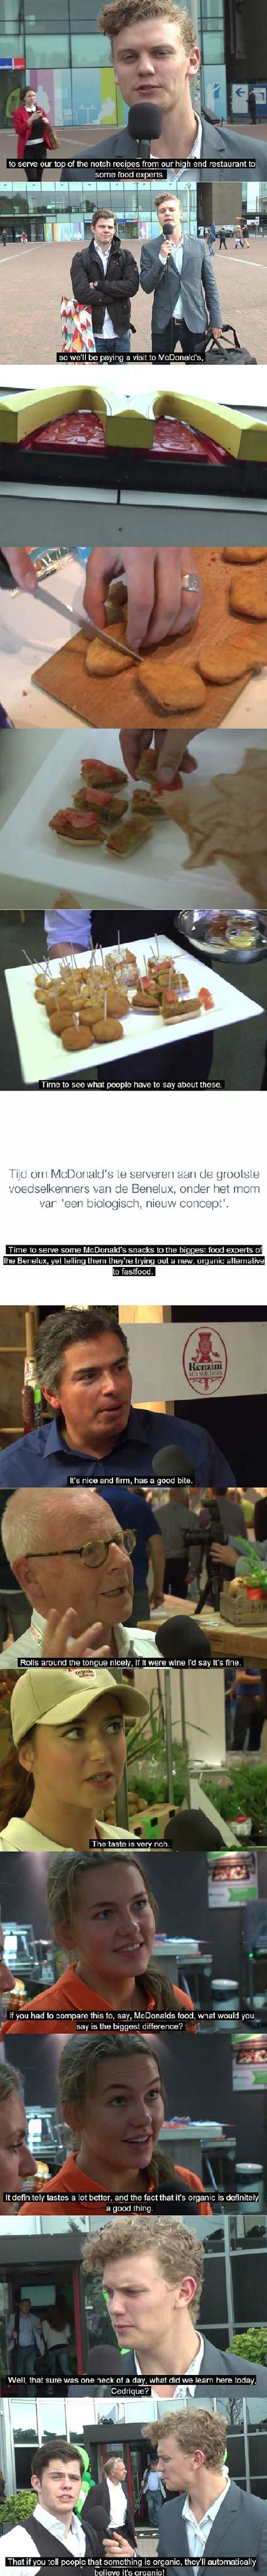 McDonald's is organic